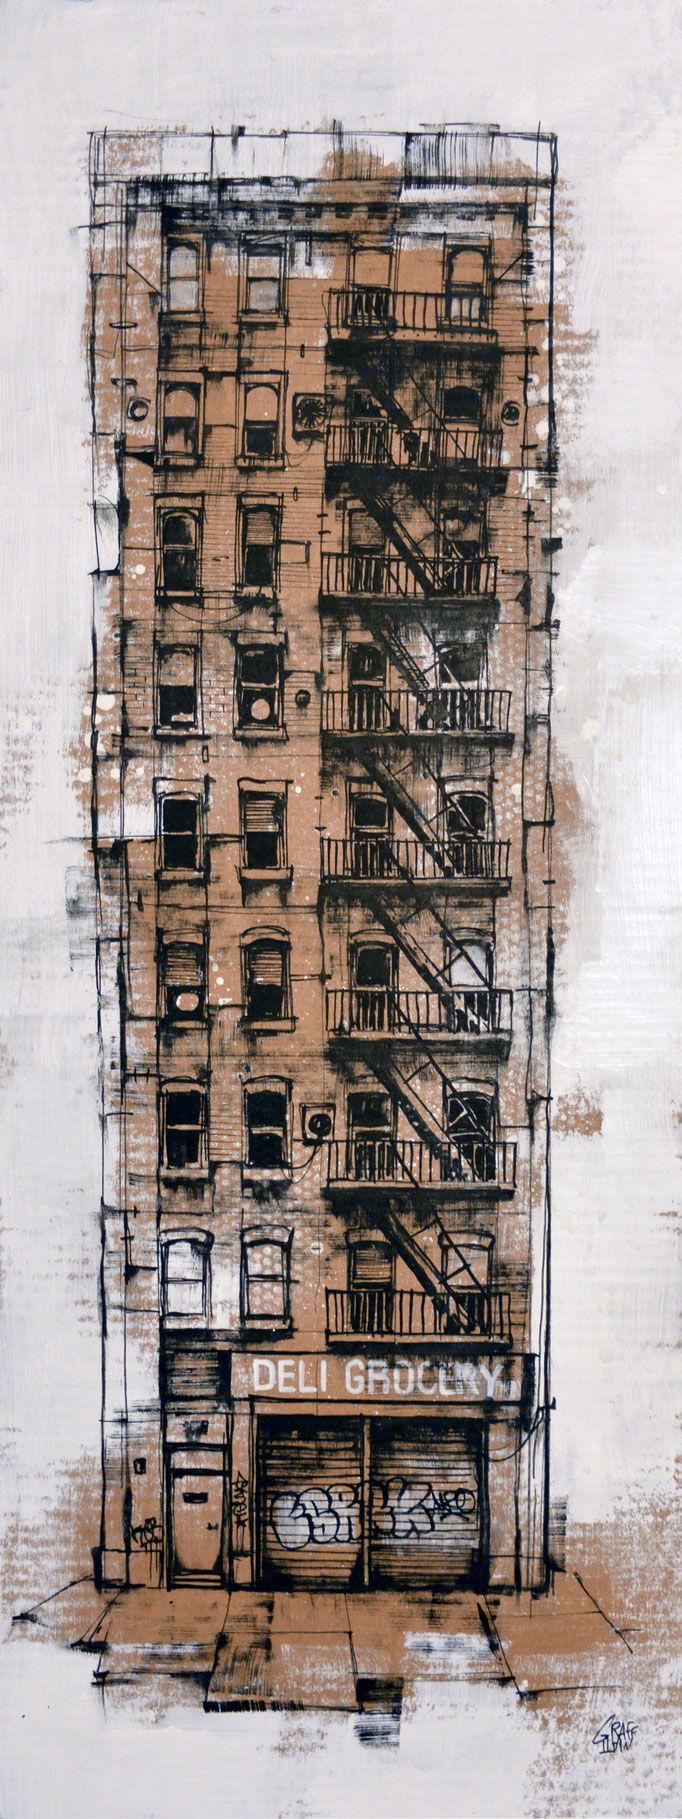 <b>DELI GROCERY</b><br>80 x 30 cm<br><a style="color:#db6464;">Vendu </a> <alt="art peinture ville newyork facade urbaine">